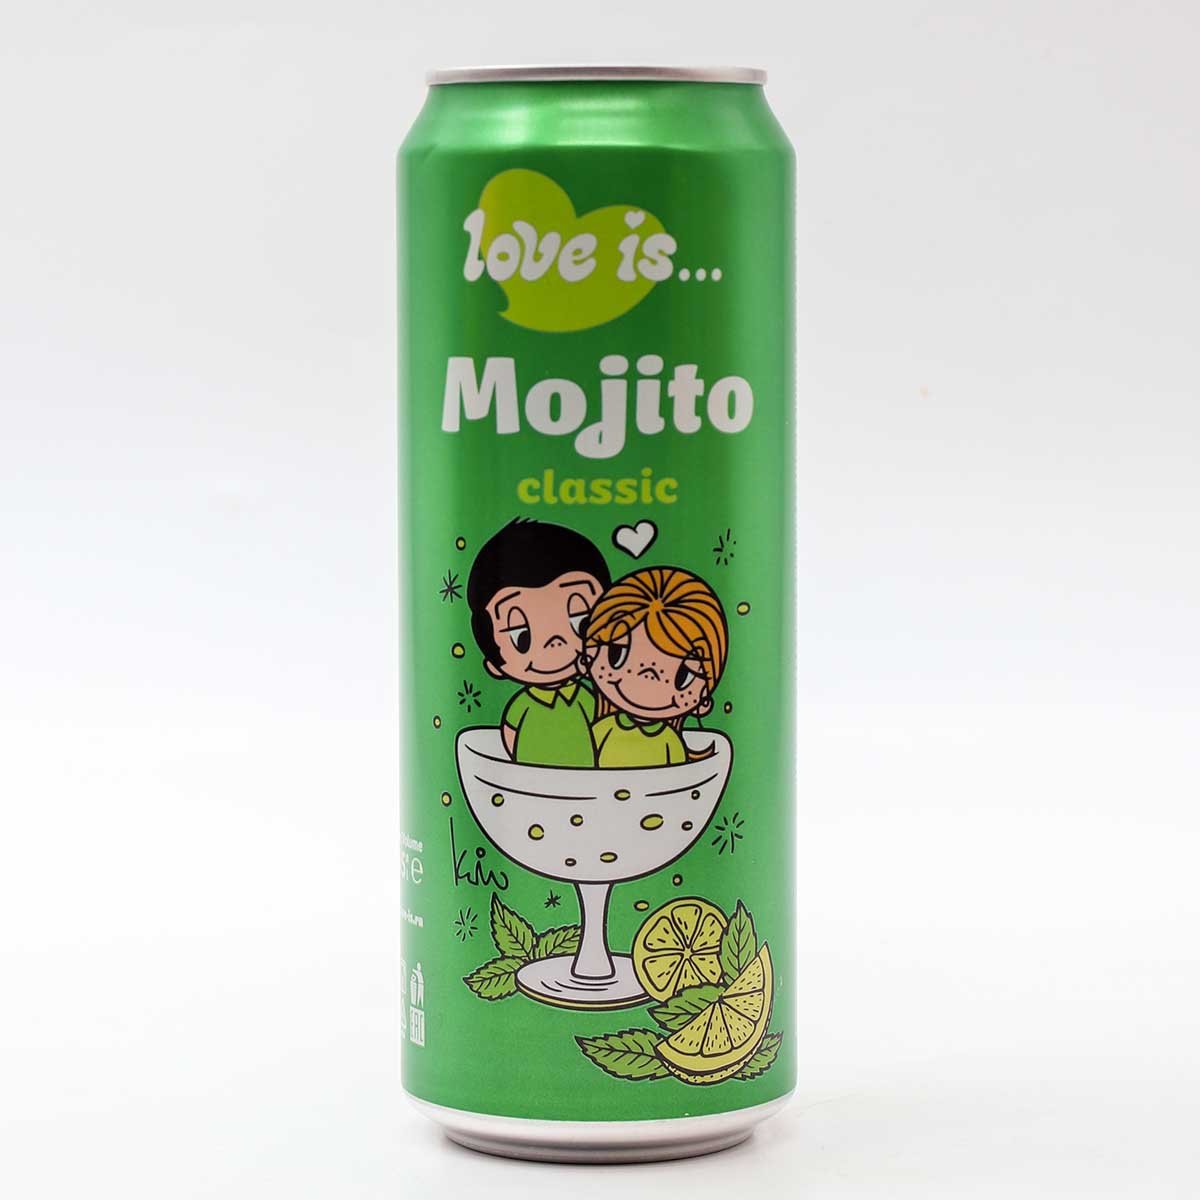 Сода лав напиток. Вкусы Мохито. Производитель напитков Lav iz. Yummy Love напиток.